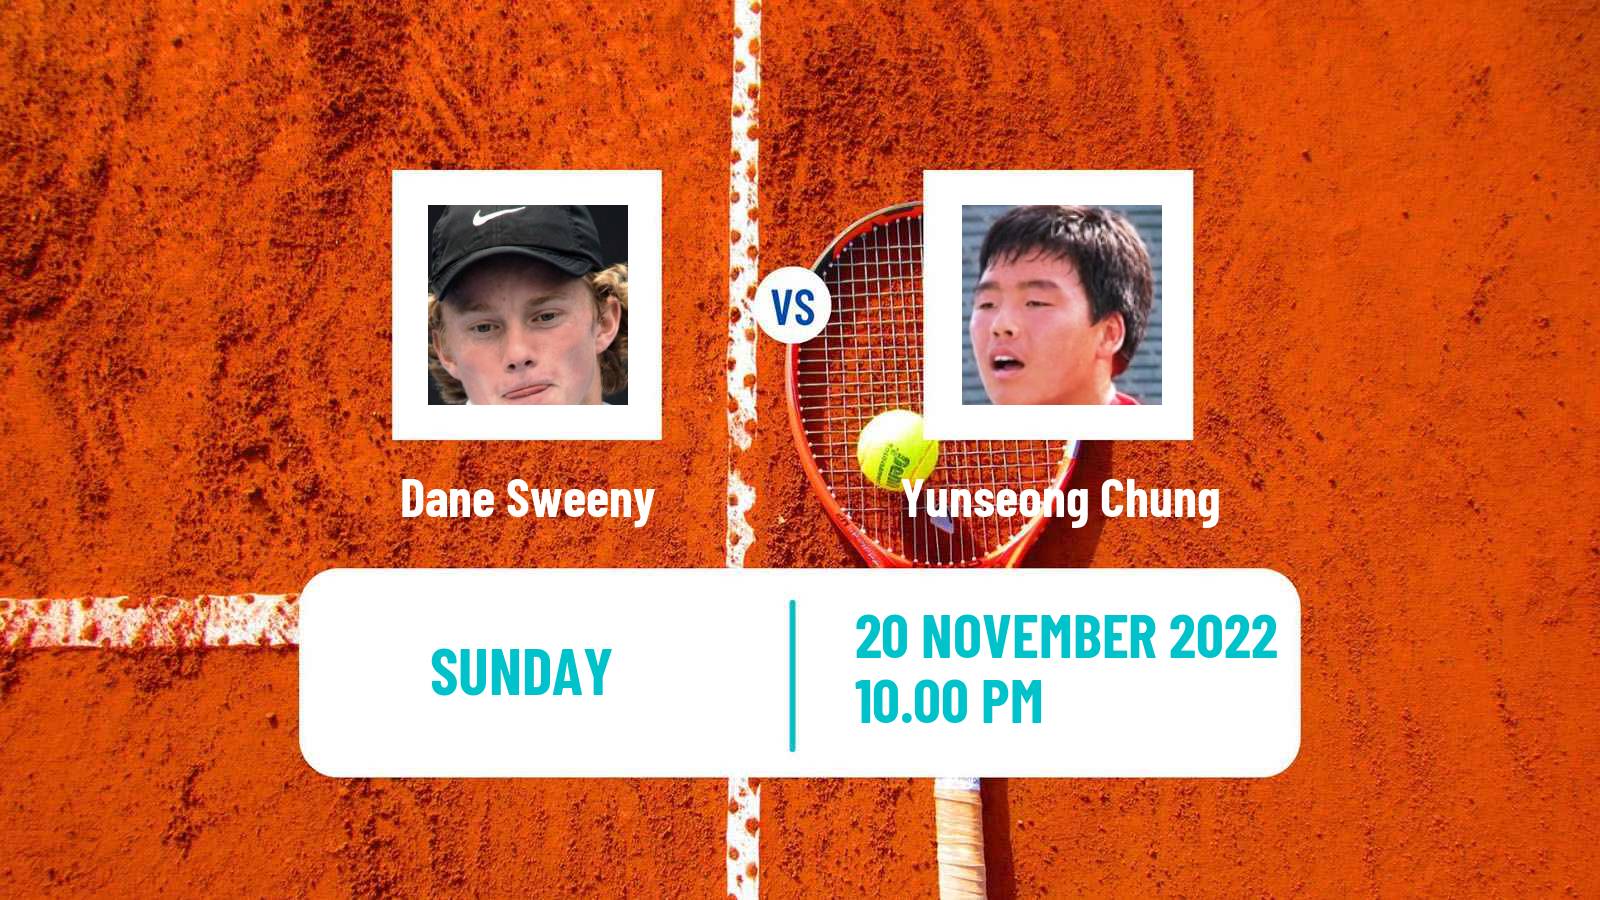 Tennis ATP Challenger Dane Sweeny - Yunseong Chung